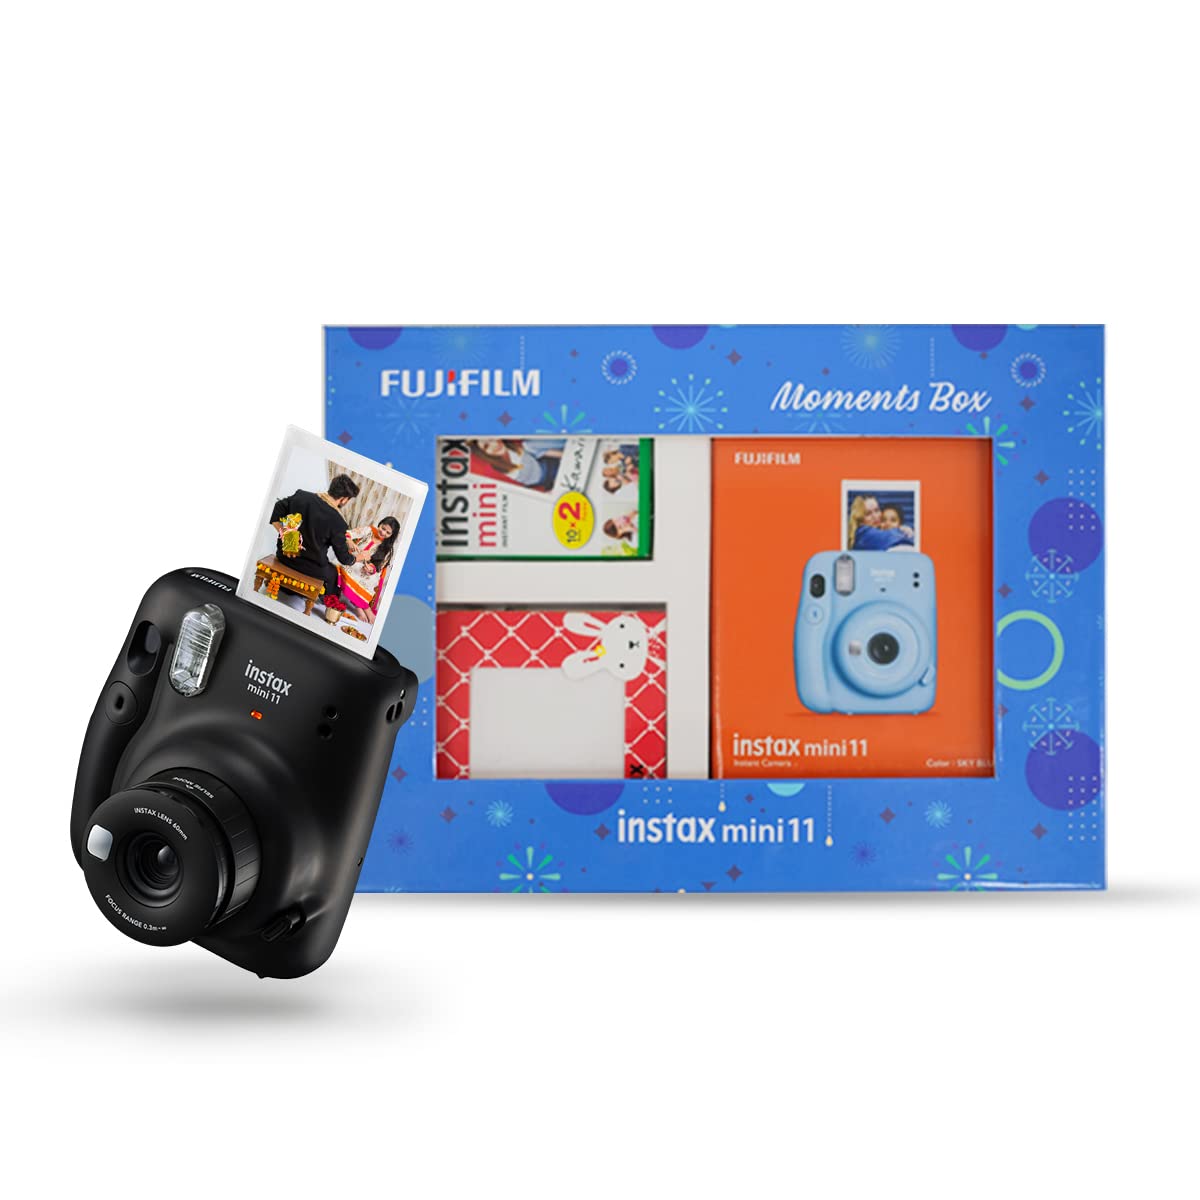 Fujifilm Instax Mini 11 Instant Camera (Sky Blue) Moments Box with 20 Shots